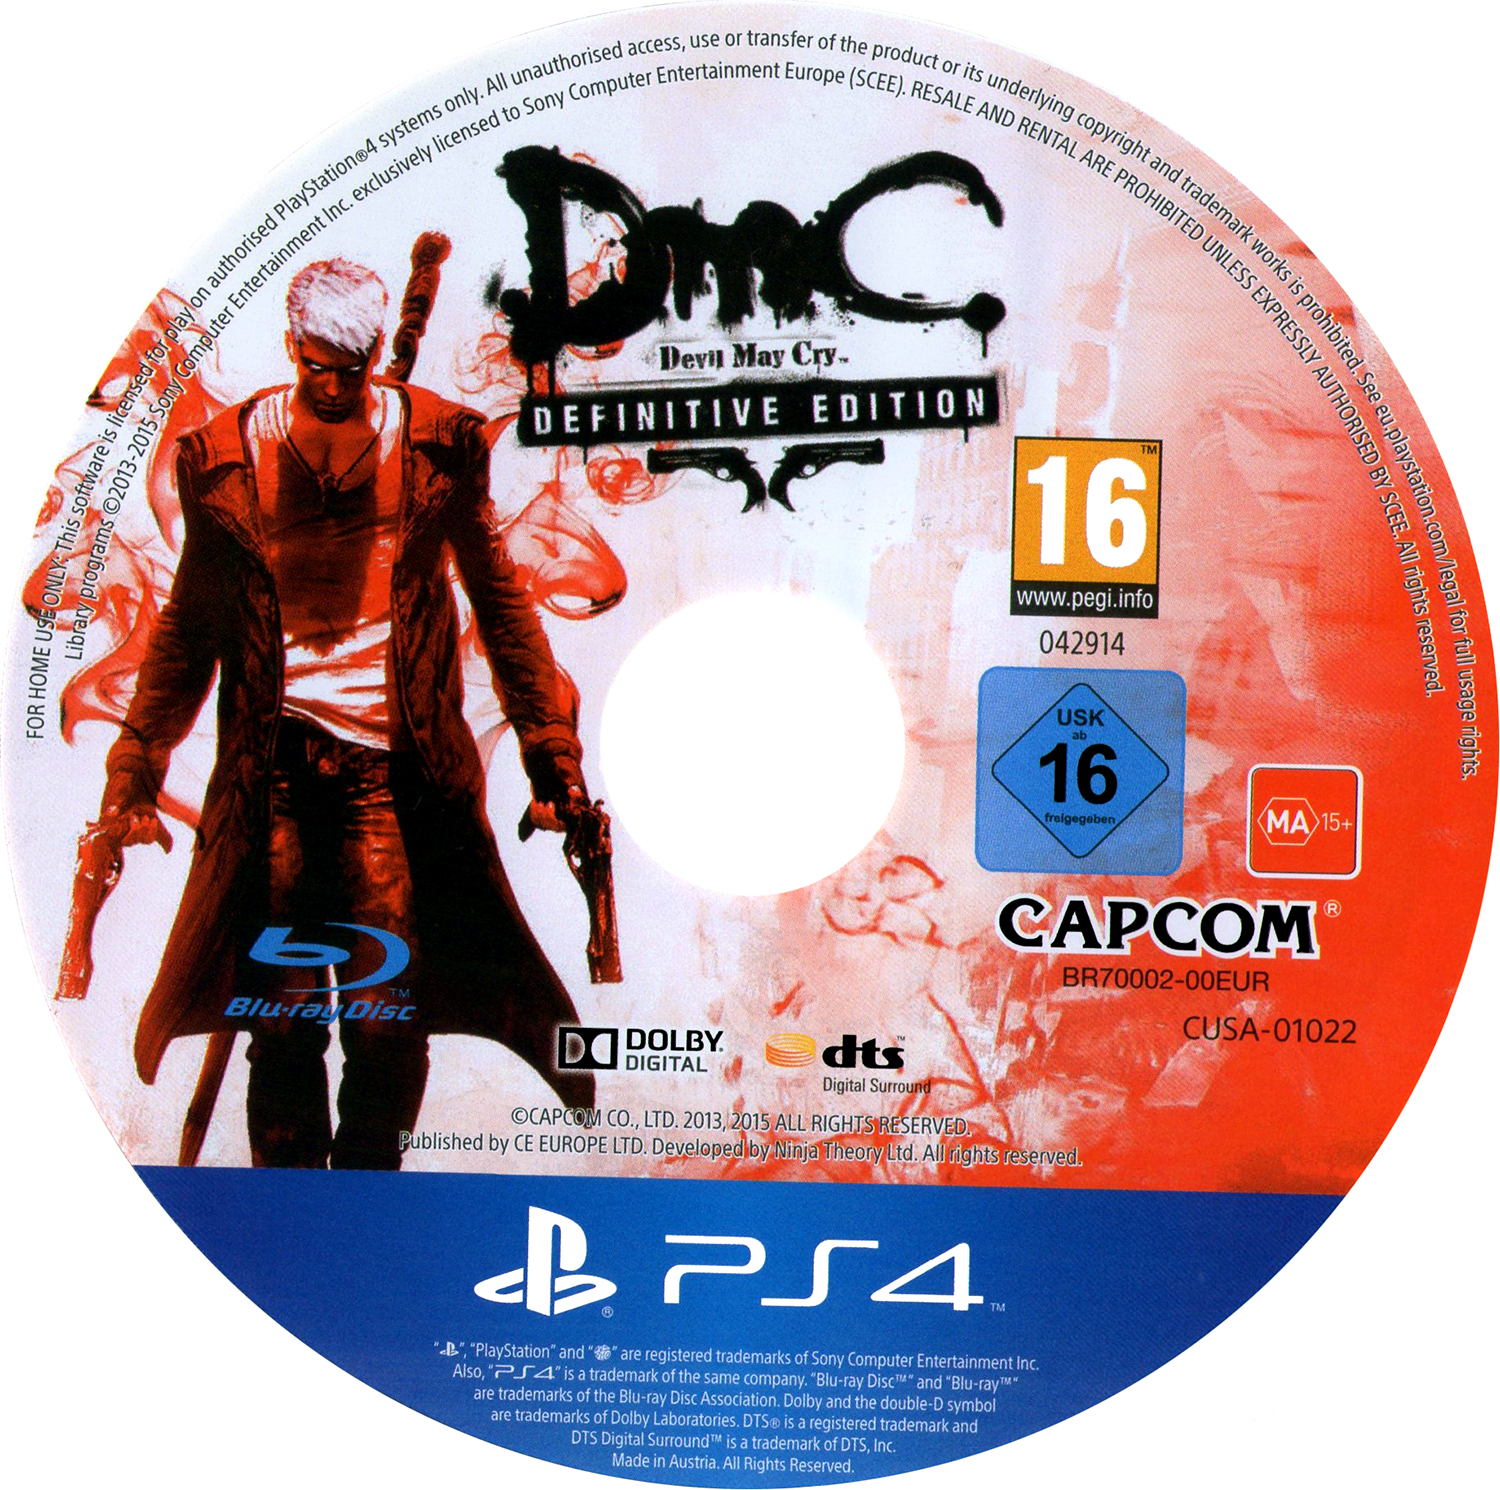 Диск для ps4 DMC: Devil May Cry. DMC Definitive Edition обложка. Девил май край 4 на пс4. Девил май край диск на ПС 4. Dmc код